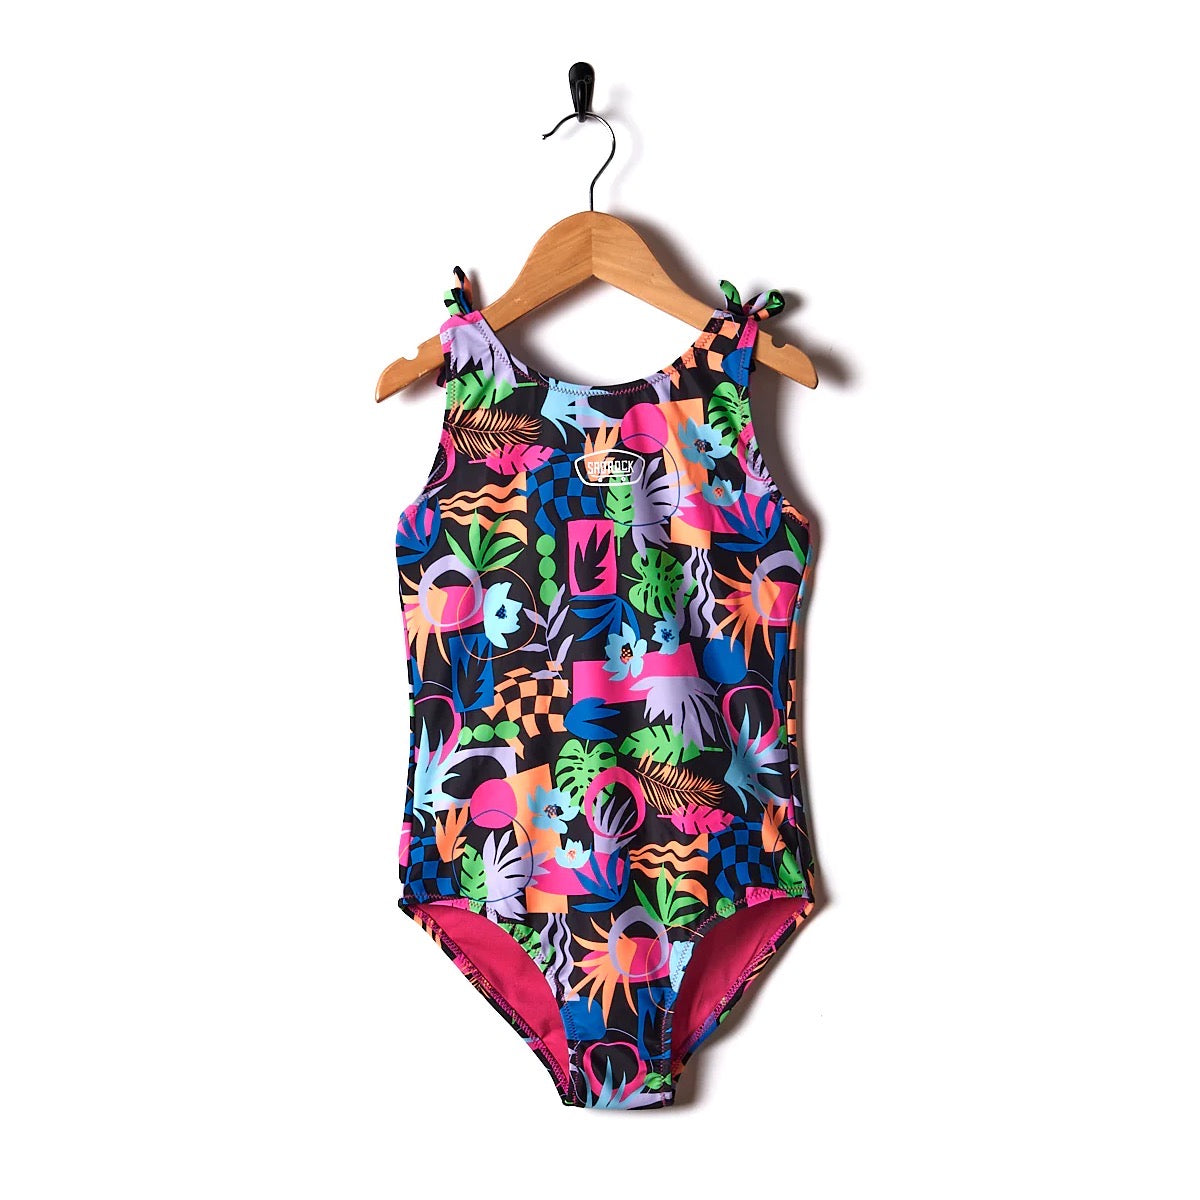 Saltrock Sunny Zephyr Swimsuit Clothing 7/8YRS / Multi,9/10YRS / Multi,11/12YRS / Multi